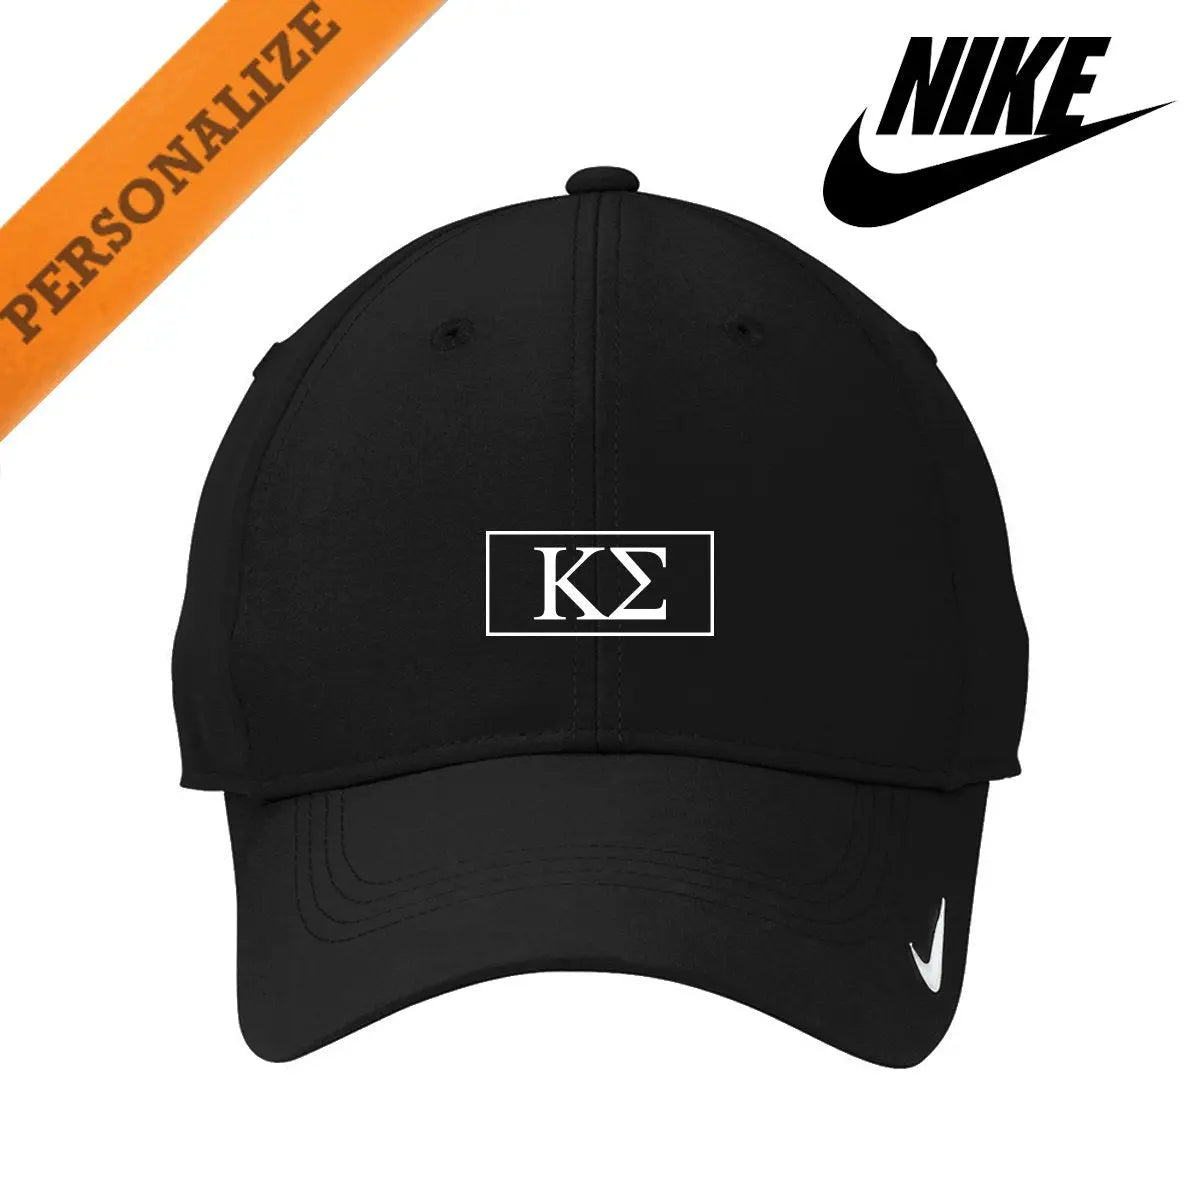 Kappa Sig Personalized Black Nike Dri-FIT Performance Hat - Kappa Sigma Official Store